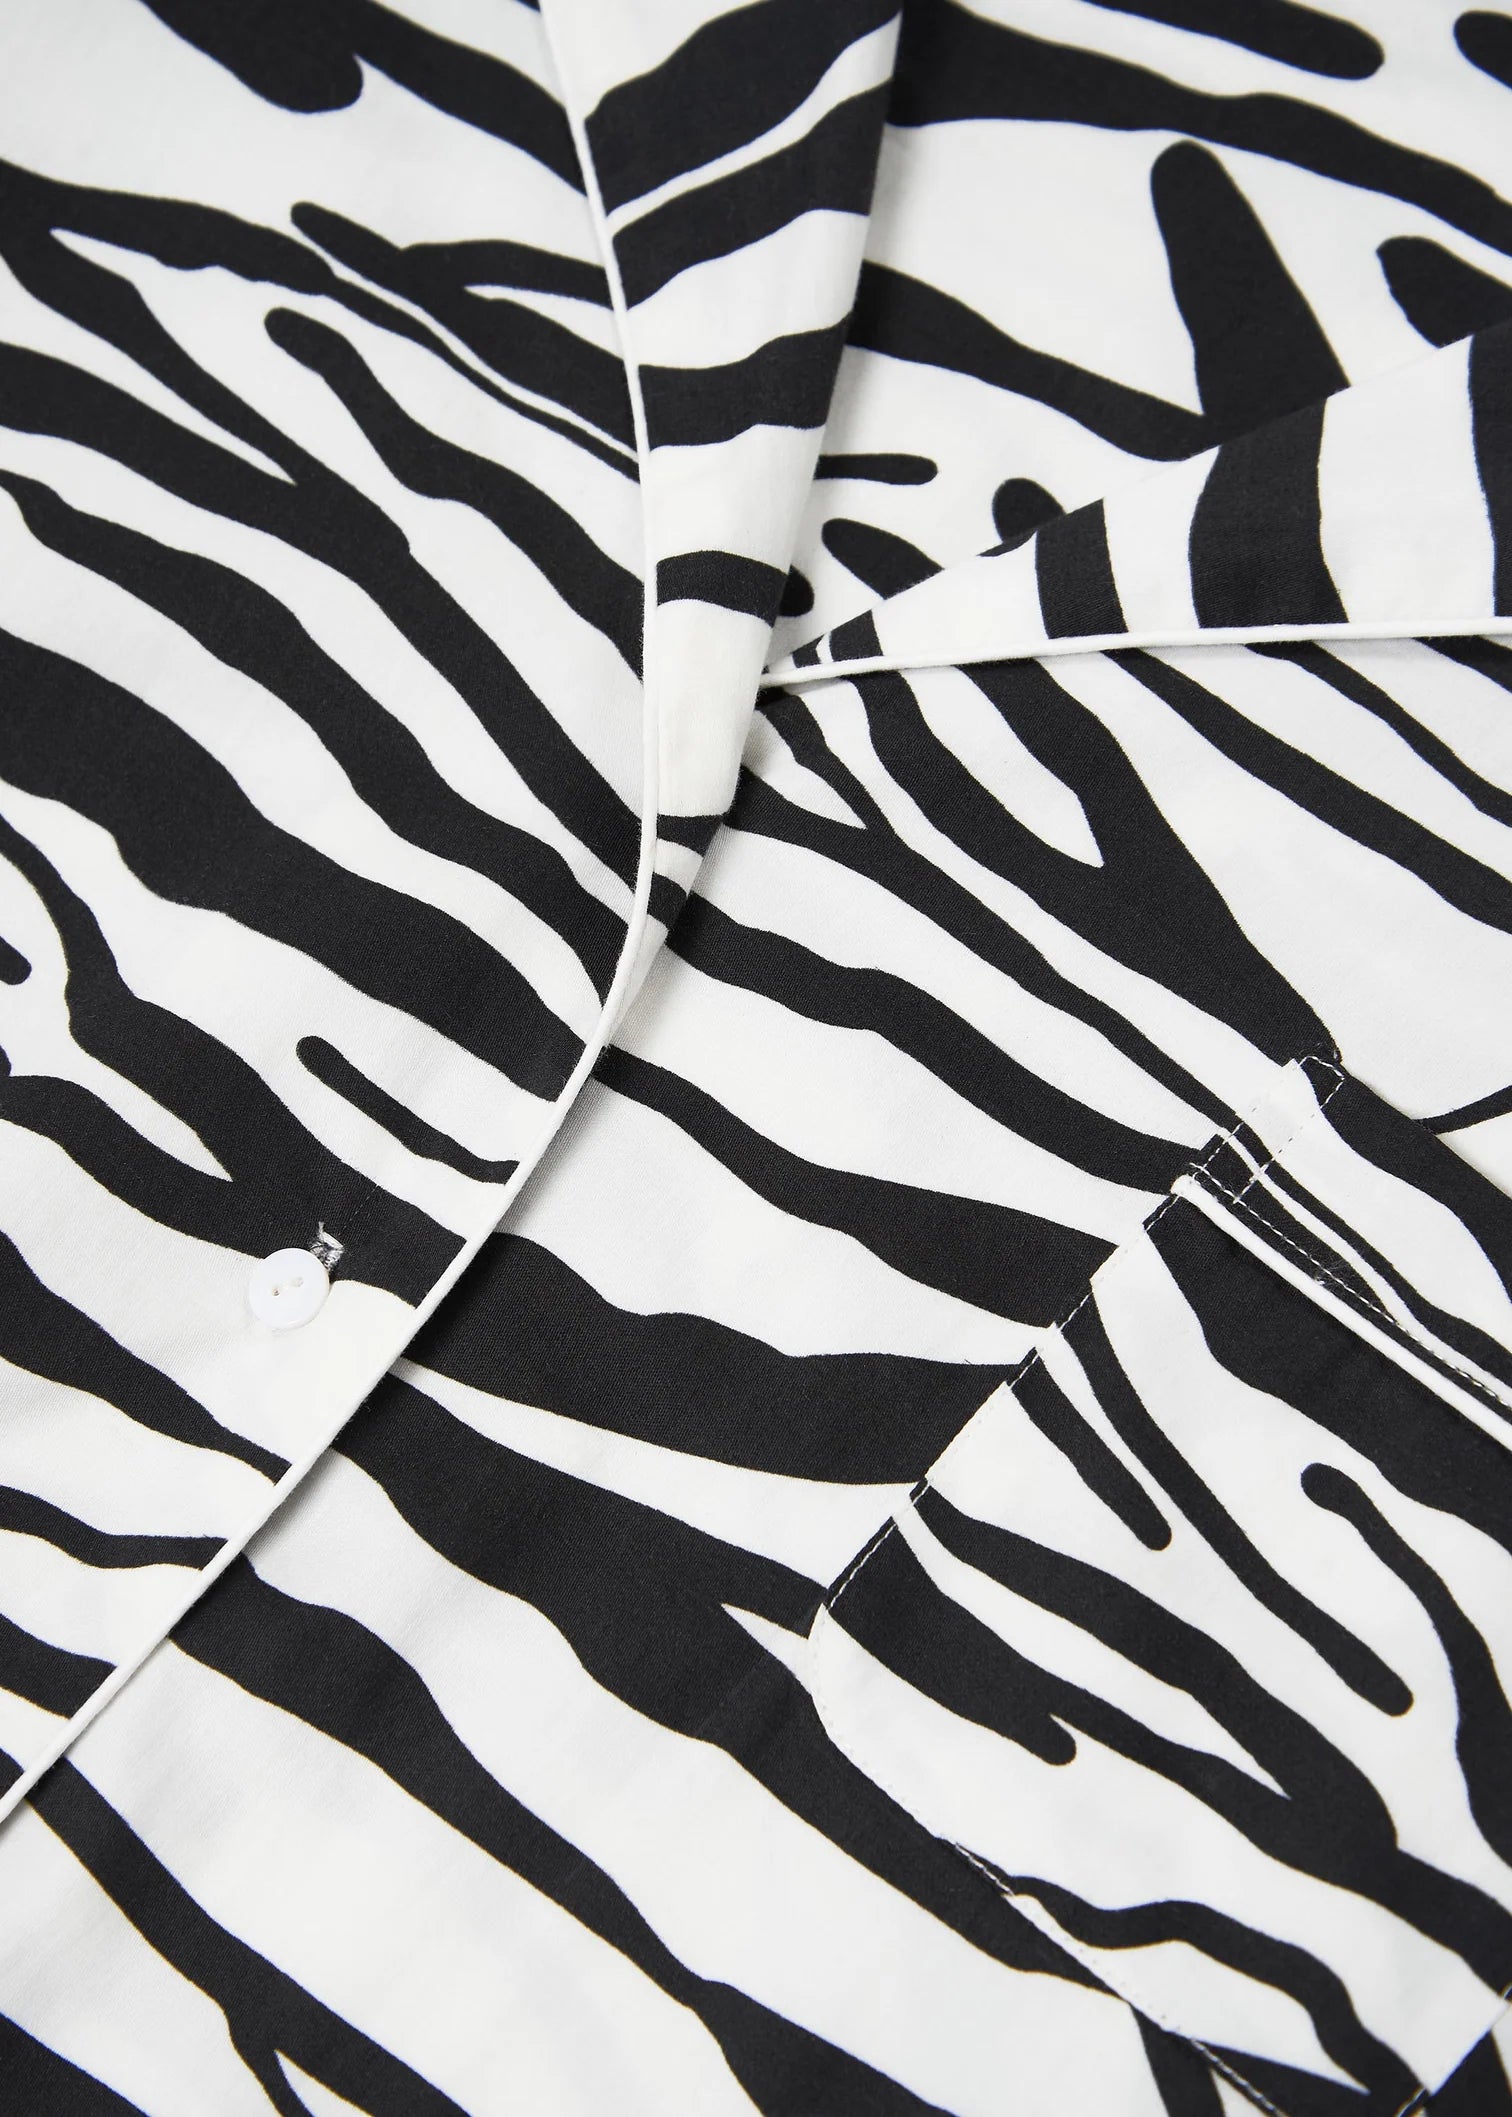 A close up of a soft, BREATHE Monochrome Tiger organic cotton pyjama top.